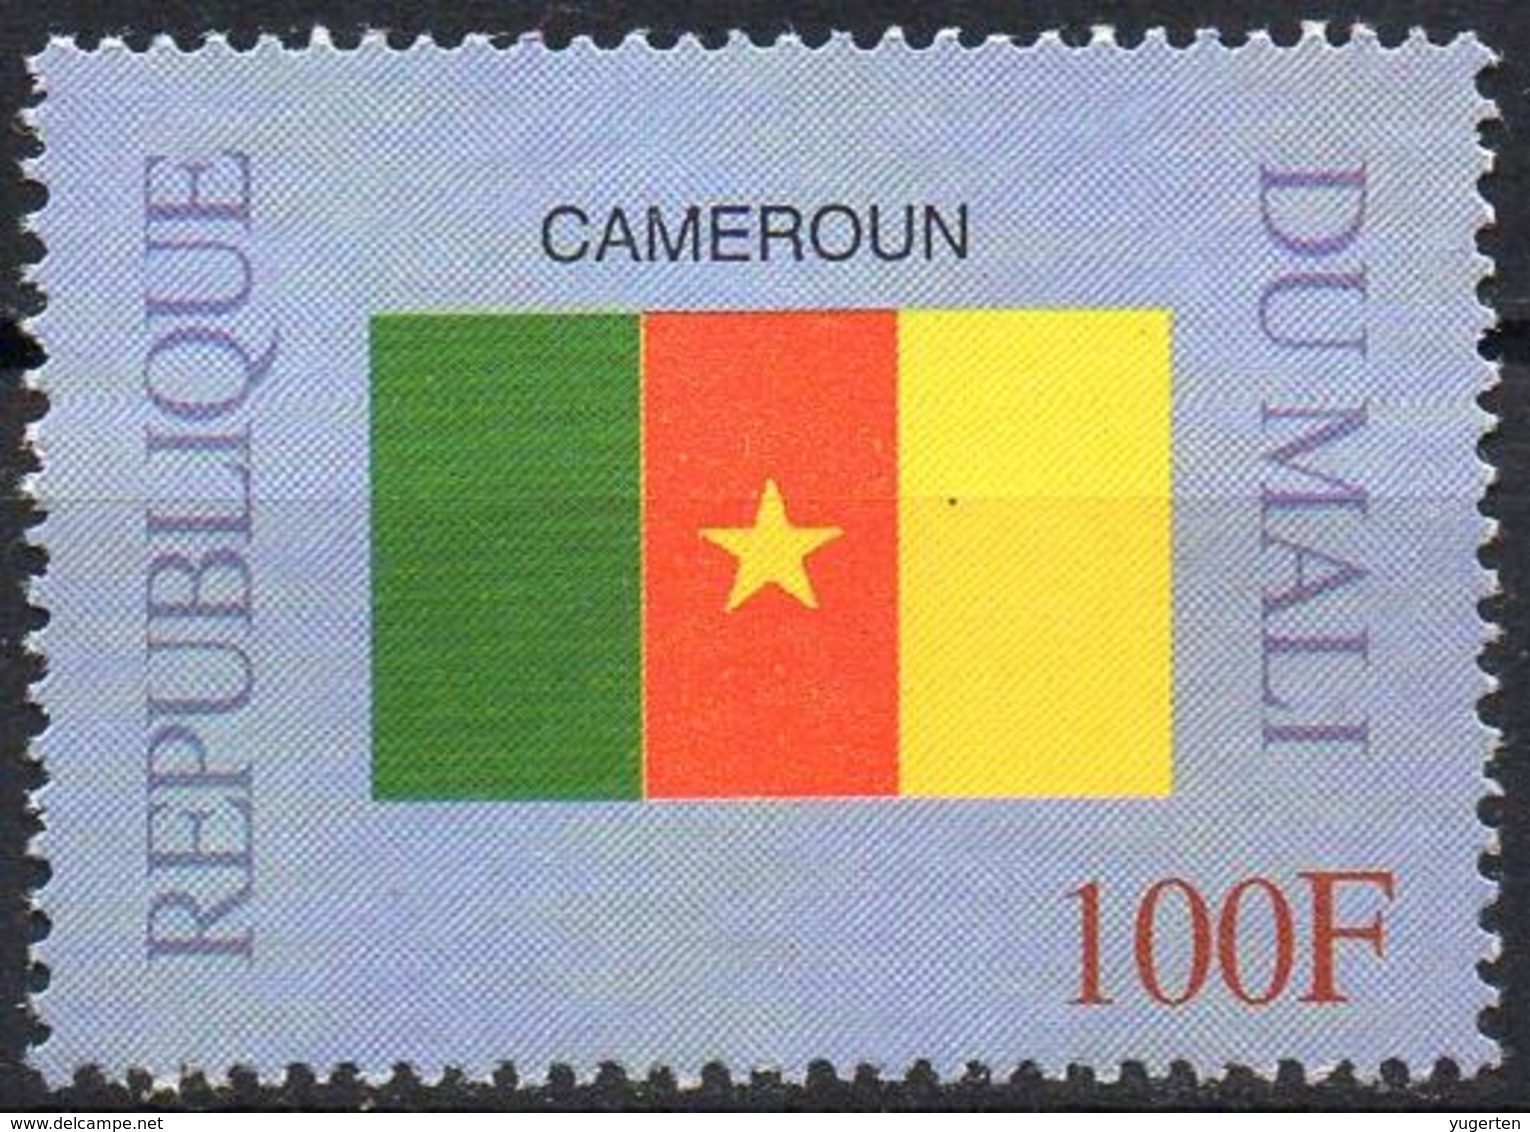 MALI 1999 - 1v - MNH** - Flag Of Cameroon - Flags Drapeaux Fahnen Bandiere Banderas флаги Cameroun Camerun - Timbres